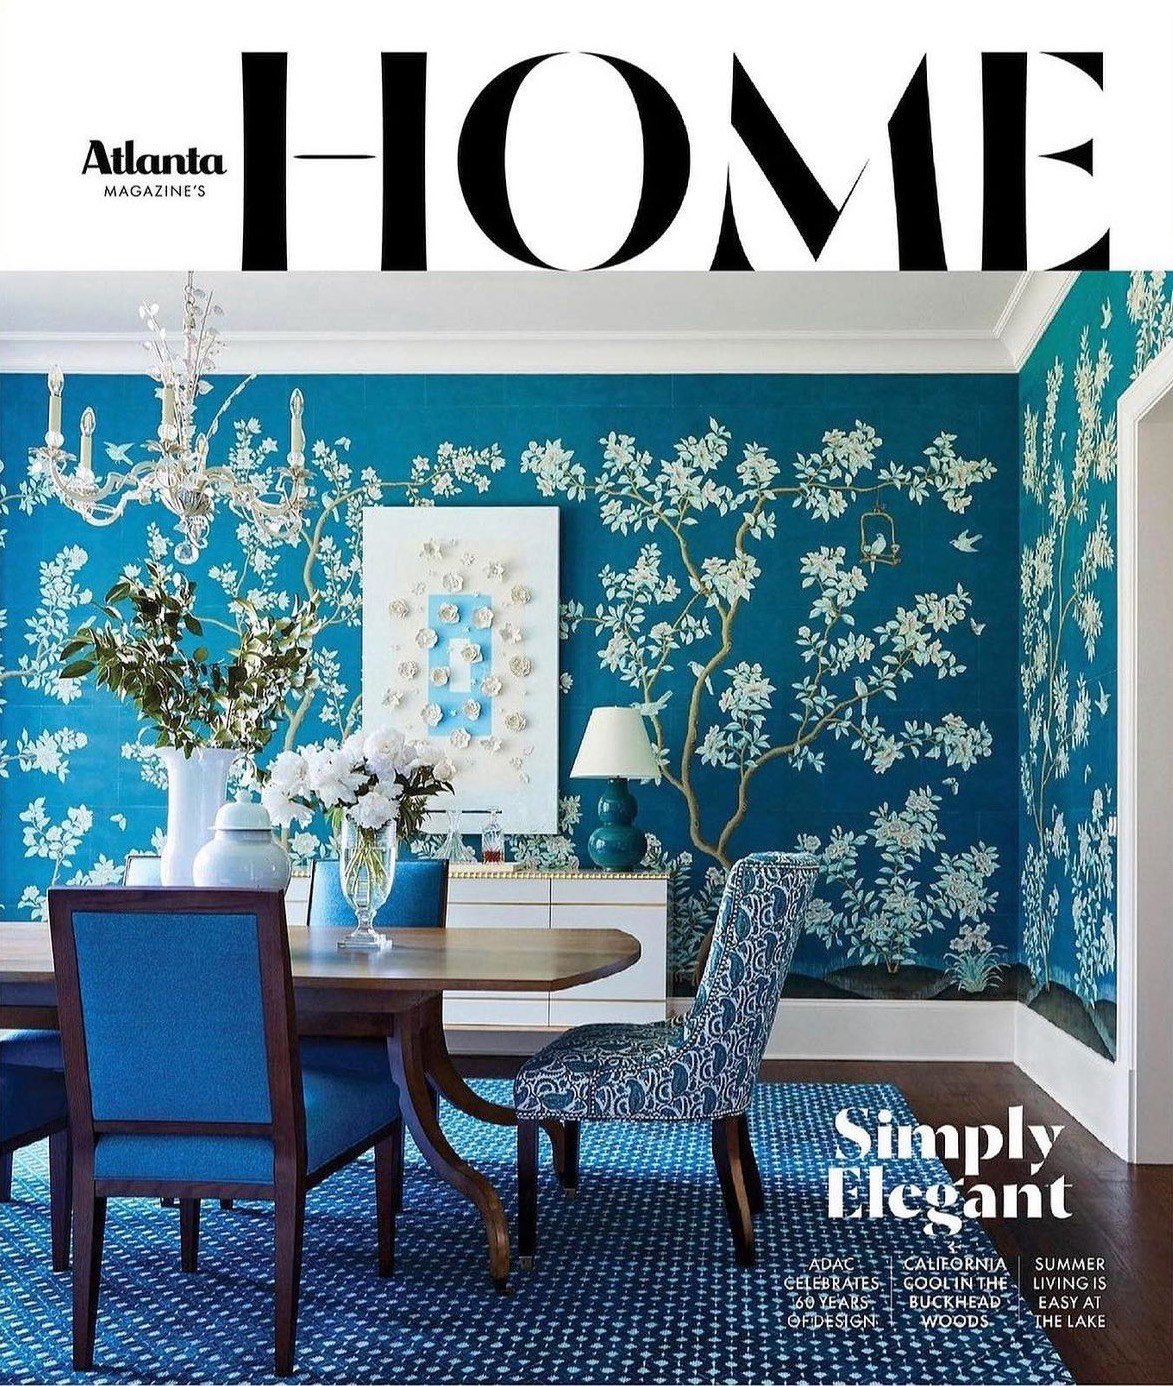 Atlanta Magazine's HOME